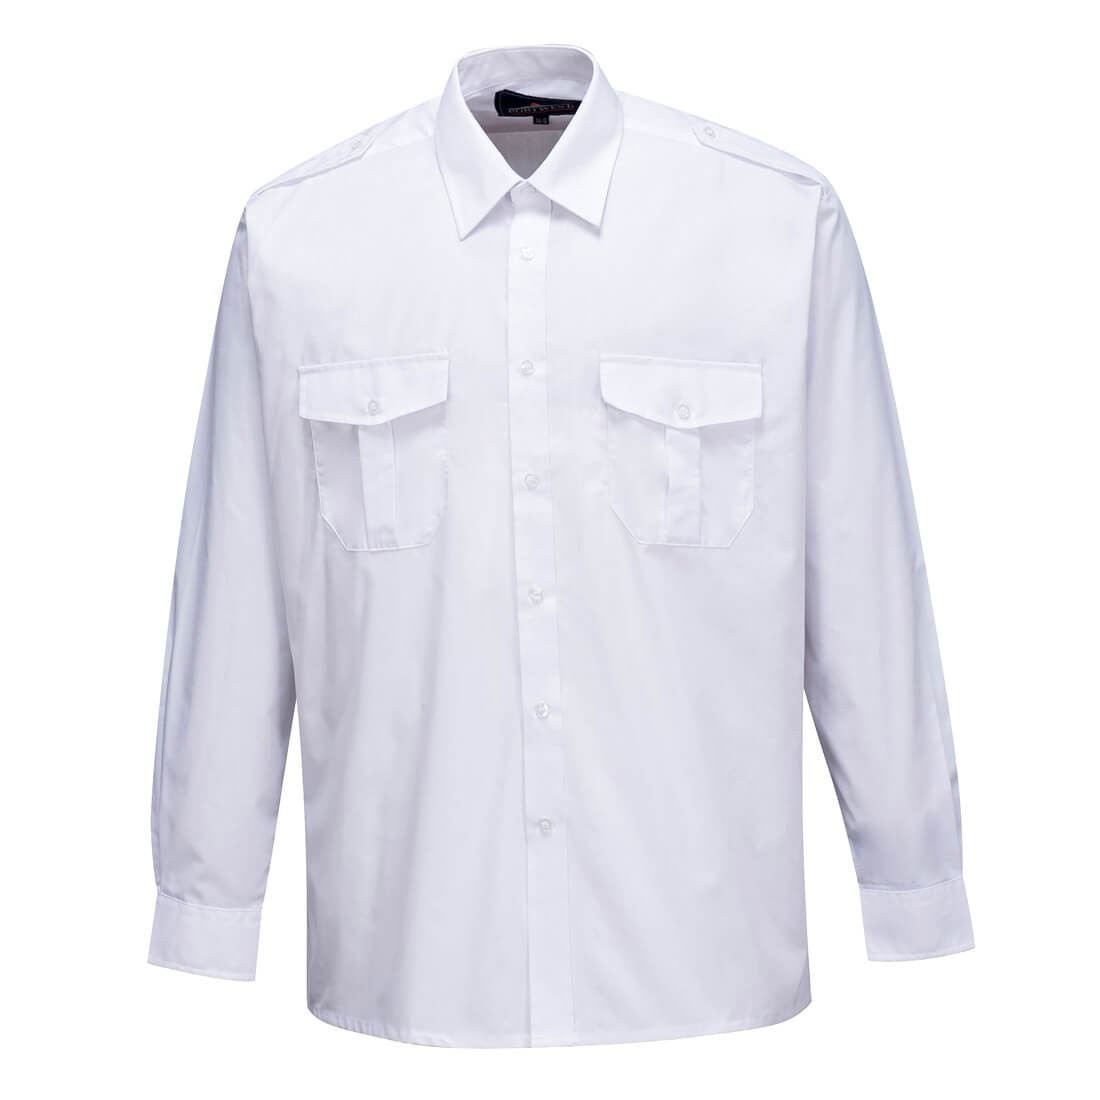 Pilot Shirt Long Sleeves - Safetywear